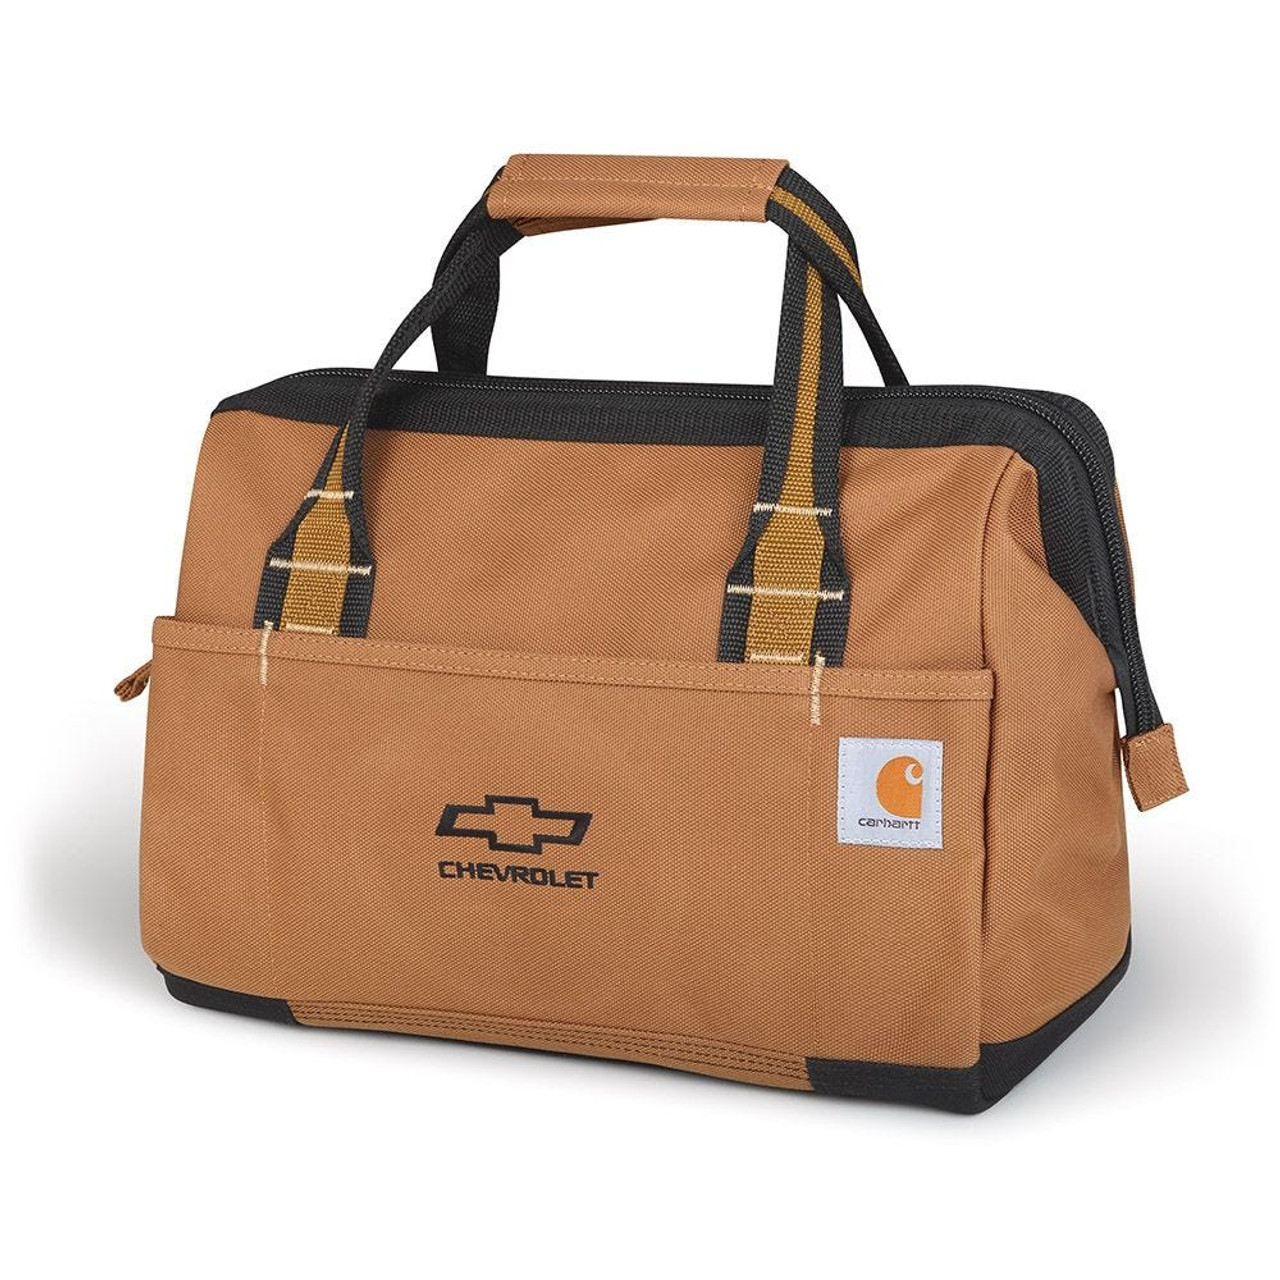 Chevrolet Carhartt Brown Tool Bag